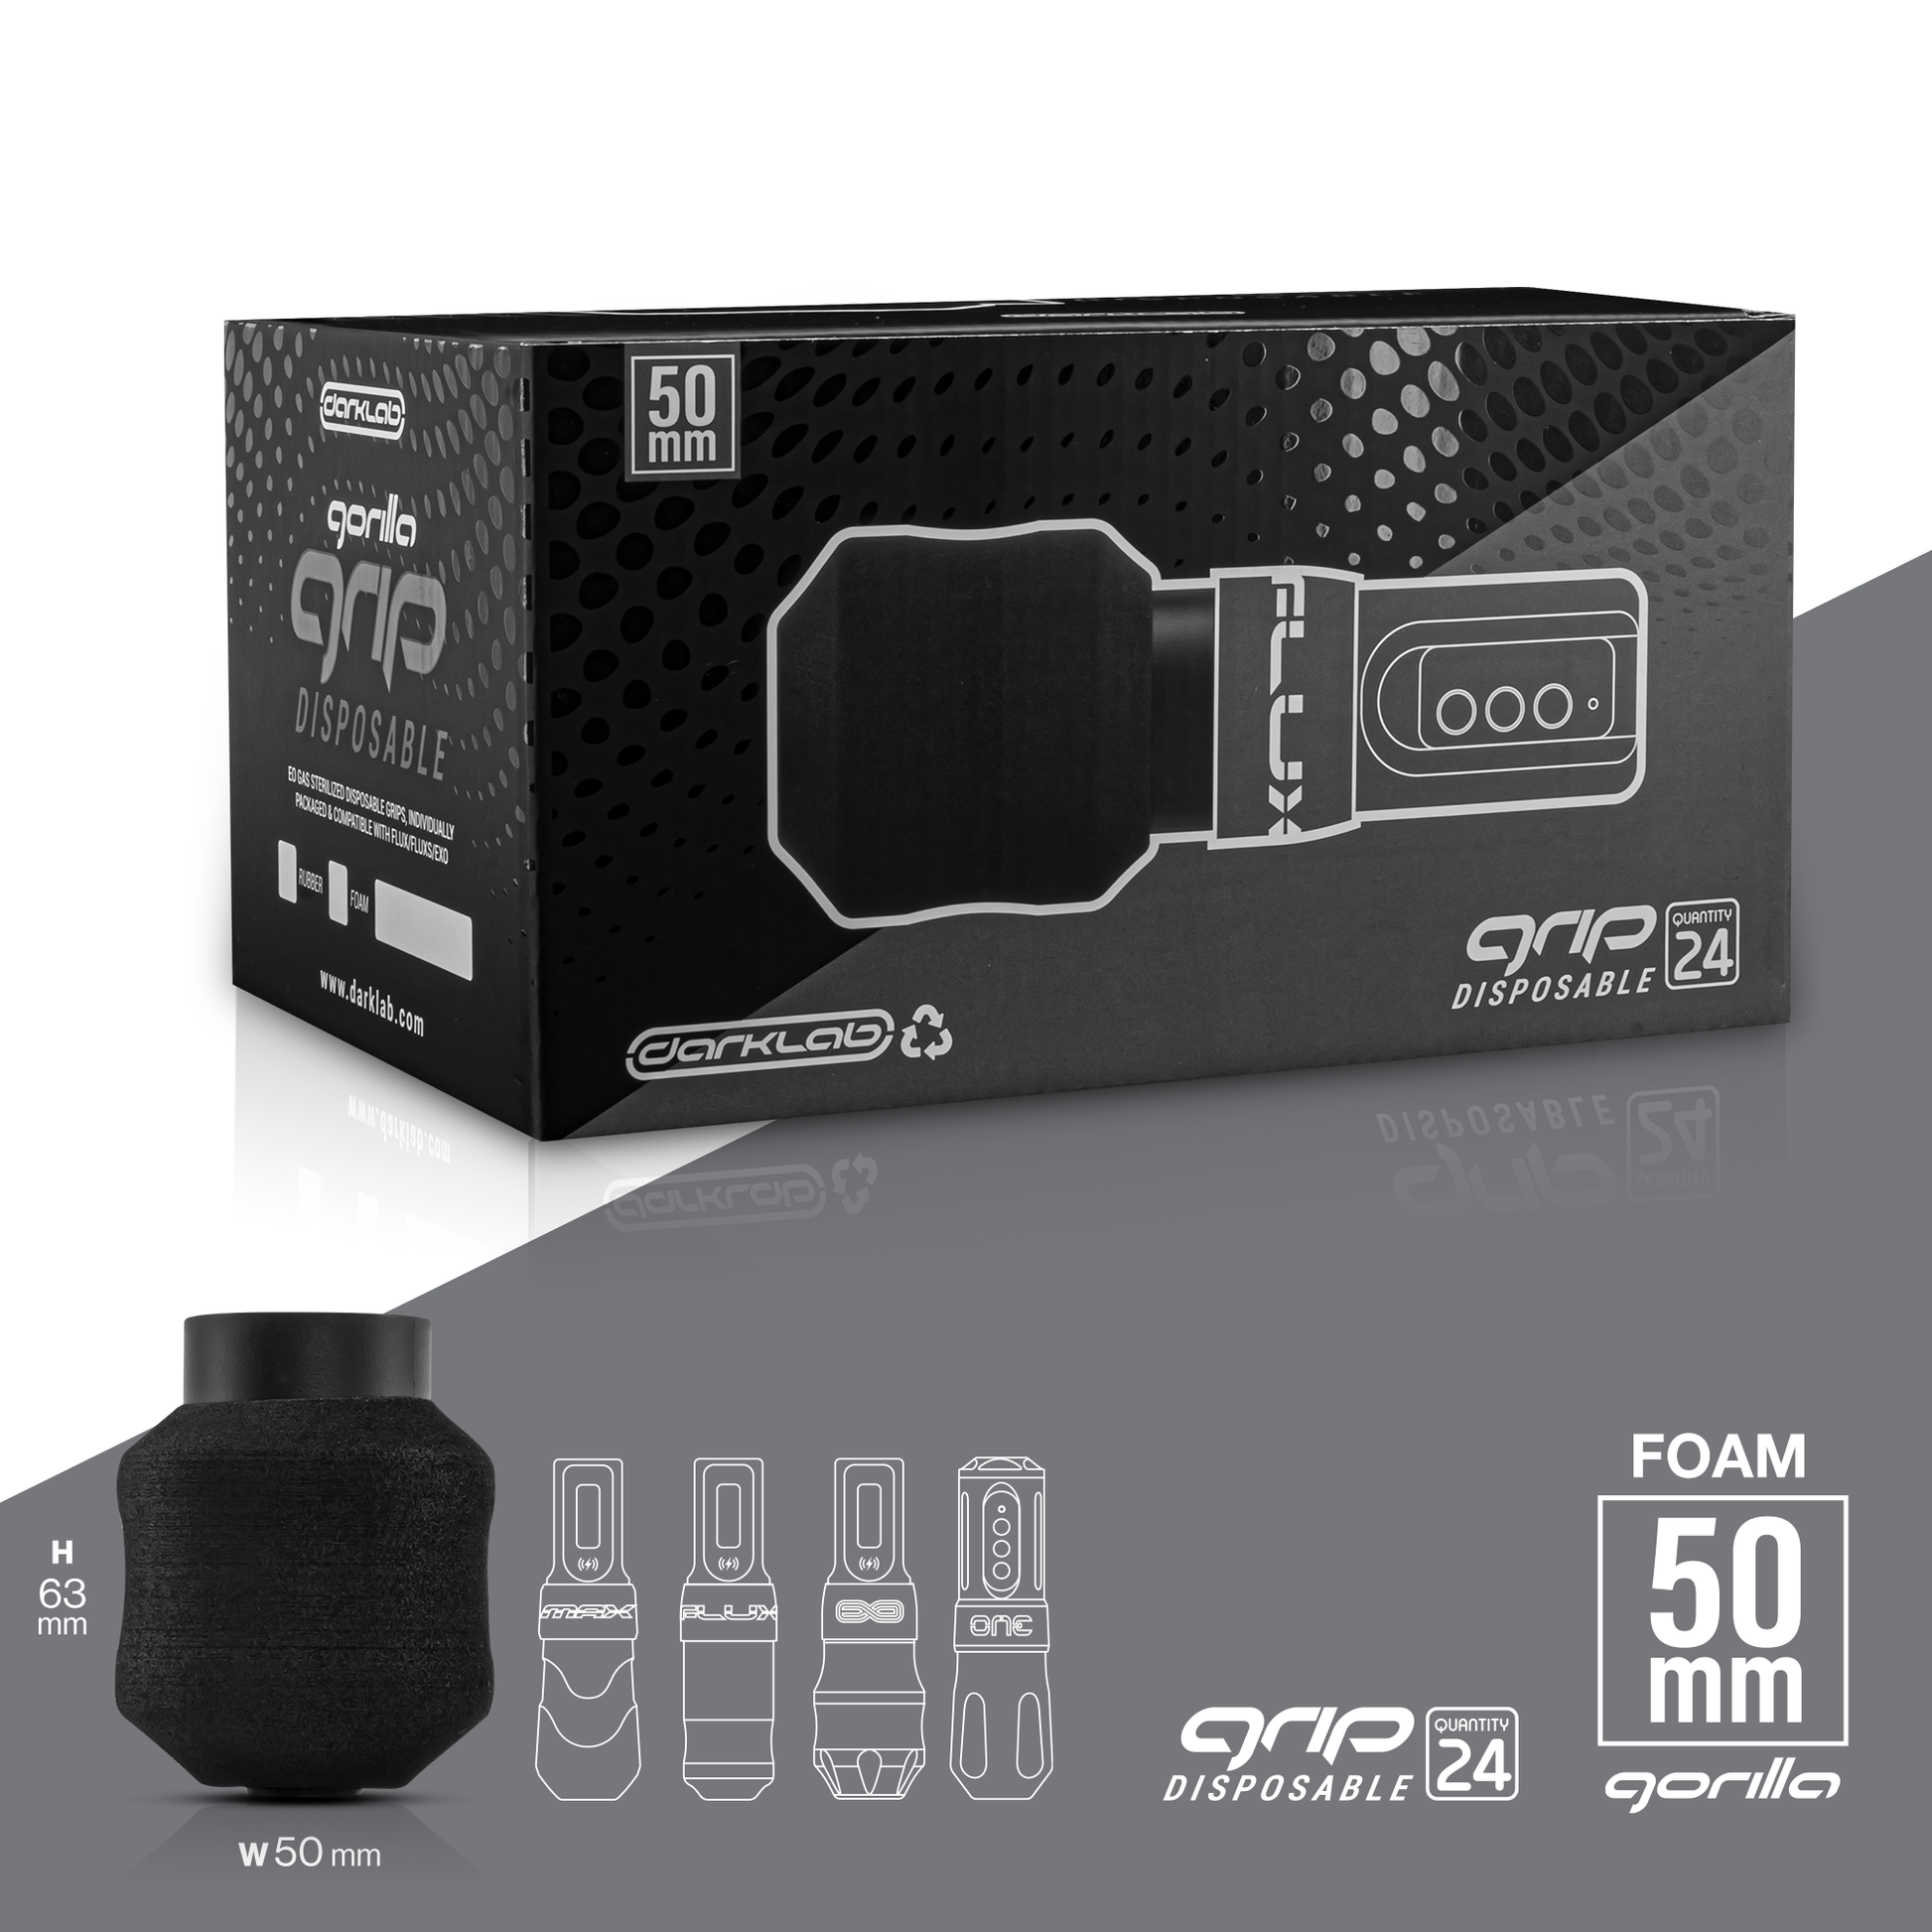 Gorilla 50mm Disposable Foam Grip - Box of 24